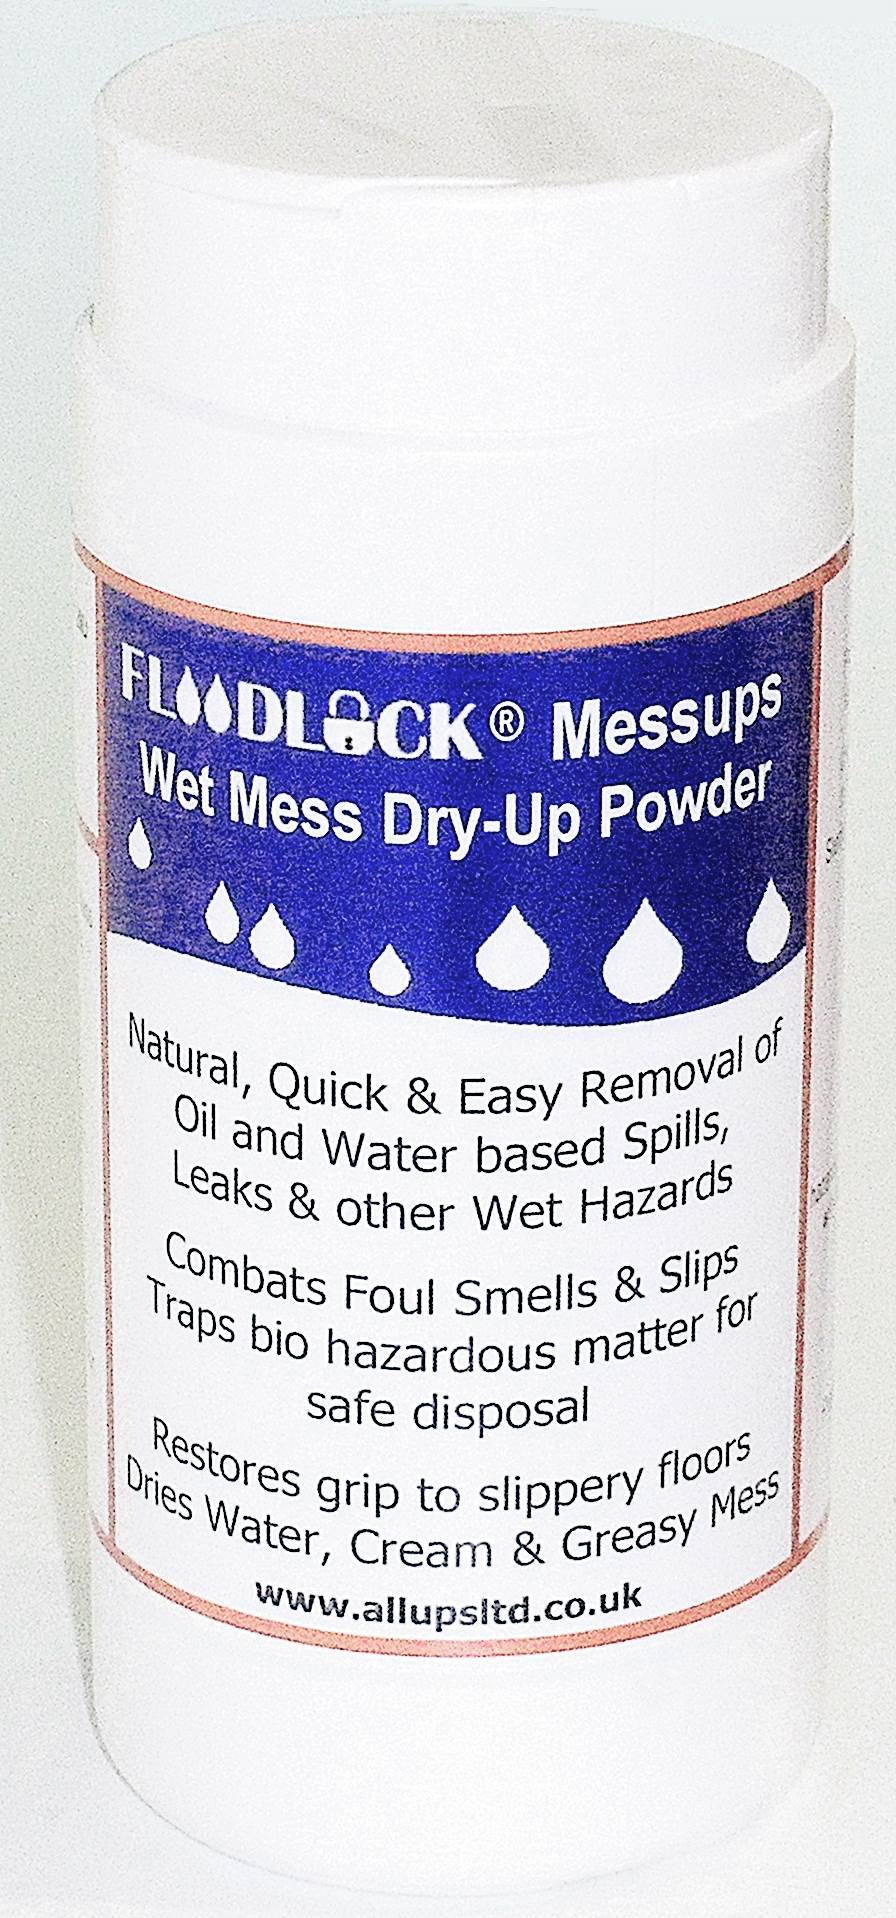 Floodlock_Messups_Wet_Mess_Dry_Up_Powder_pack